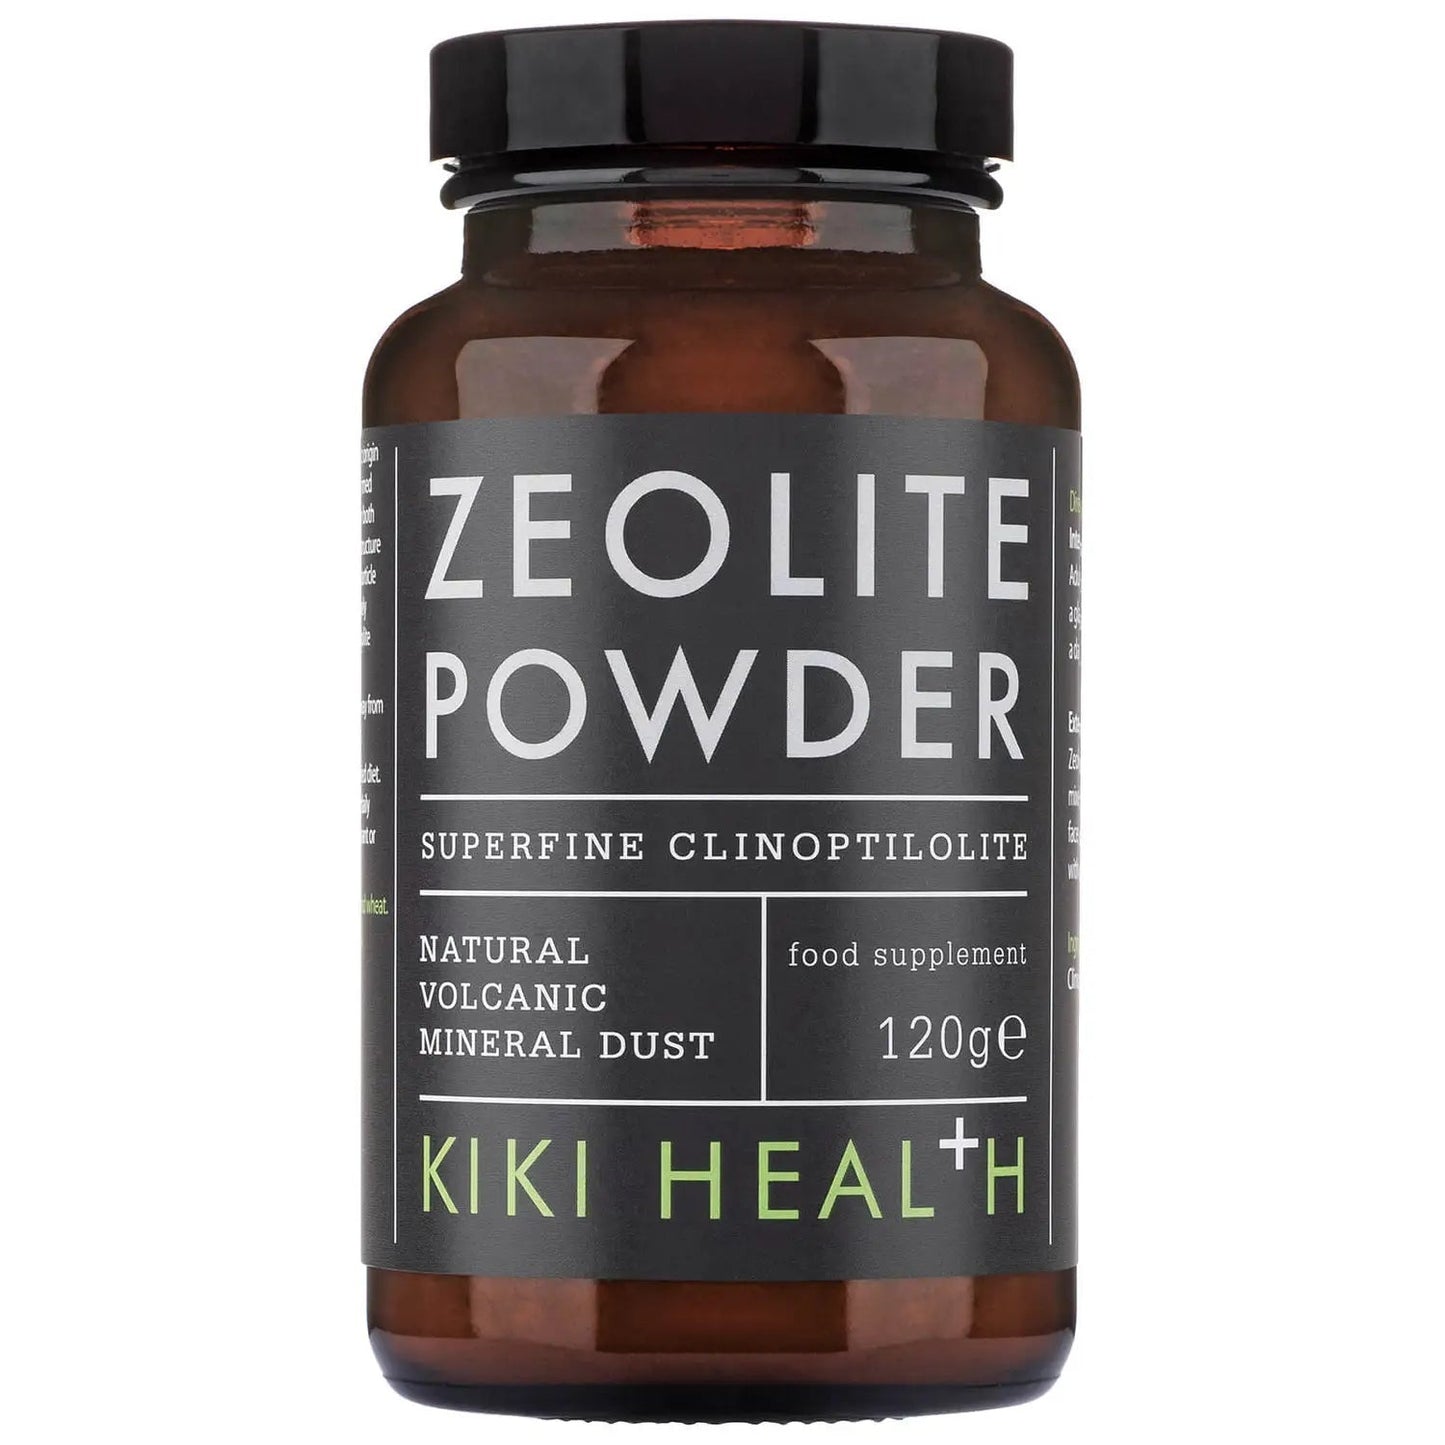 Zeolite em Pó - Kiki Health